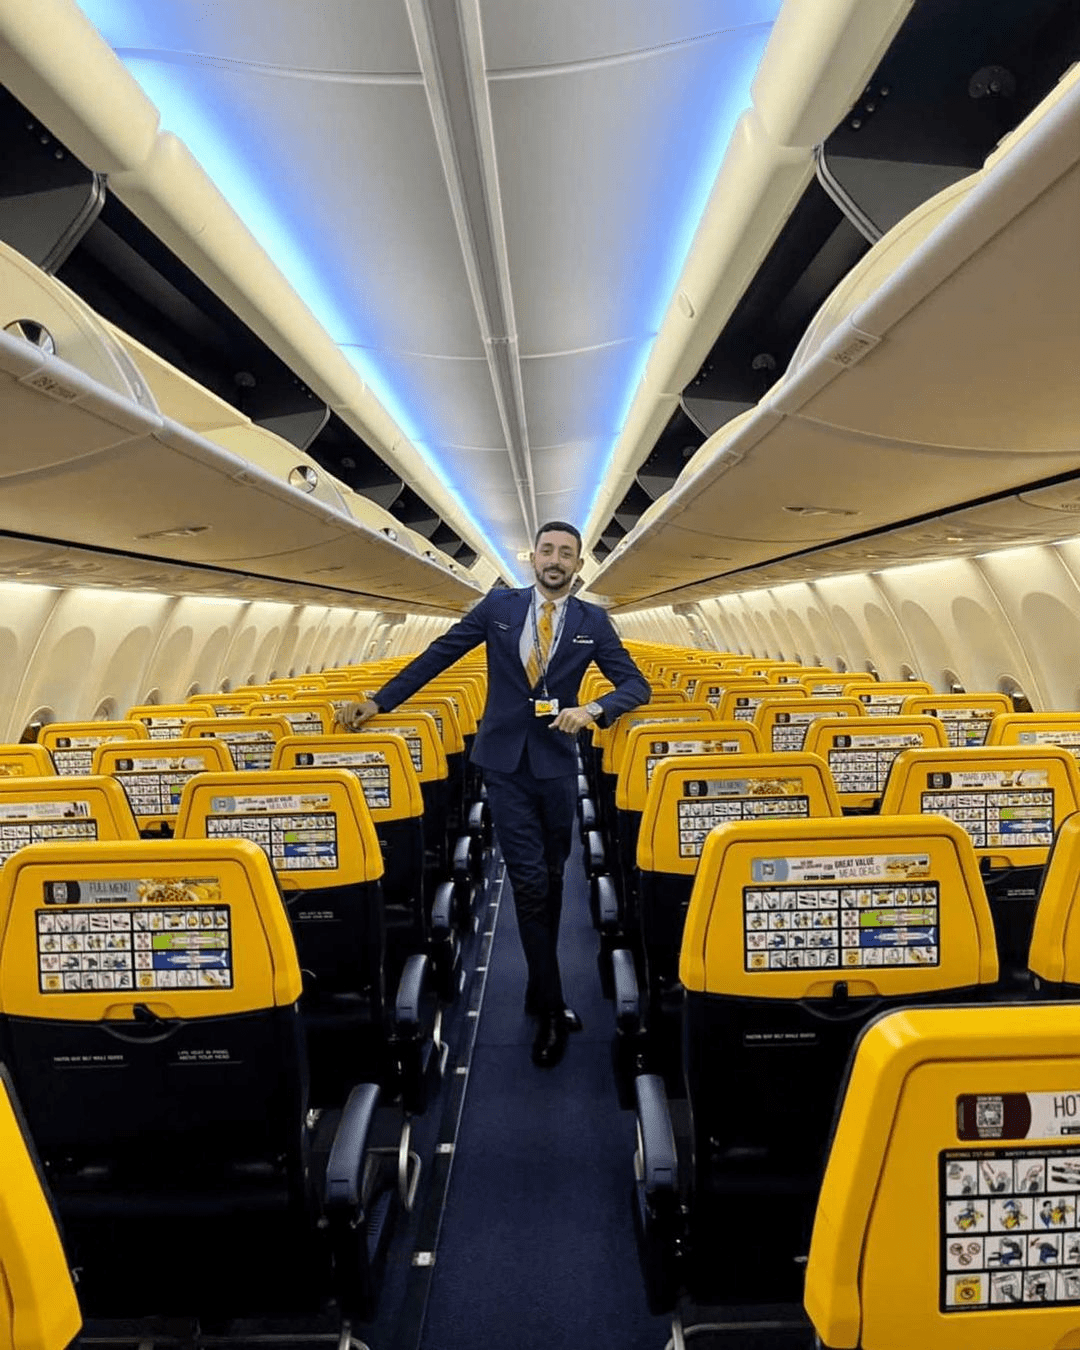 Budget European Airlines - Ryanair